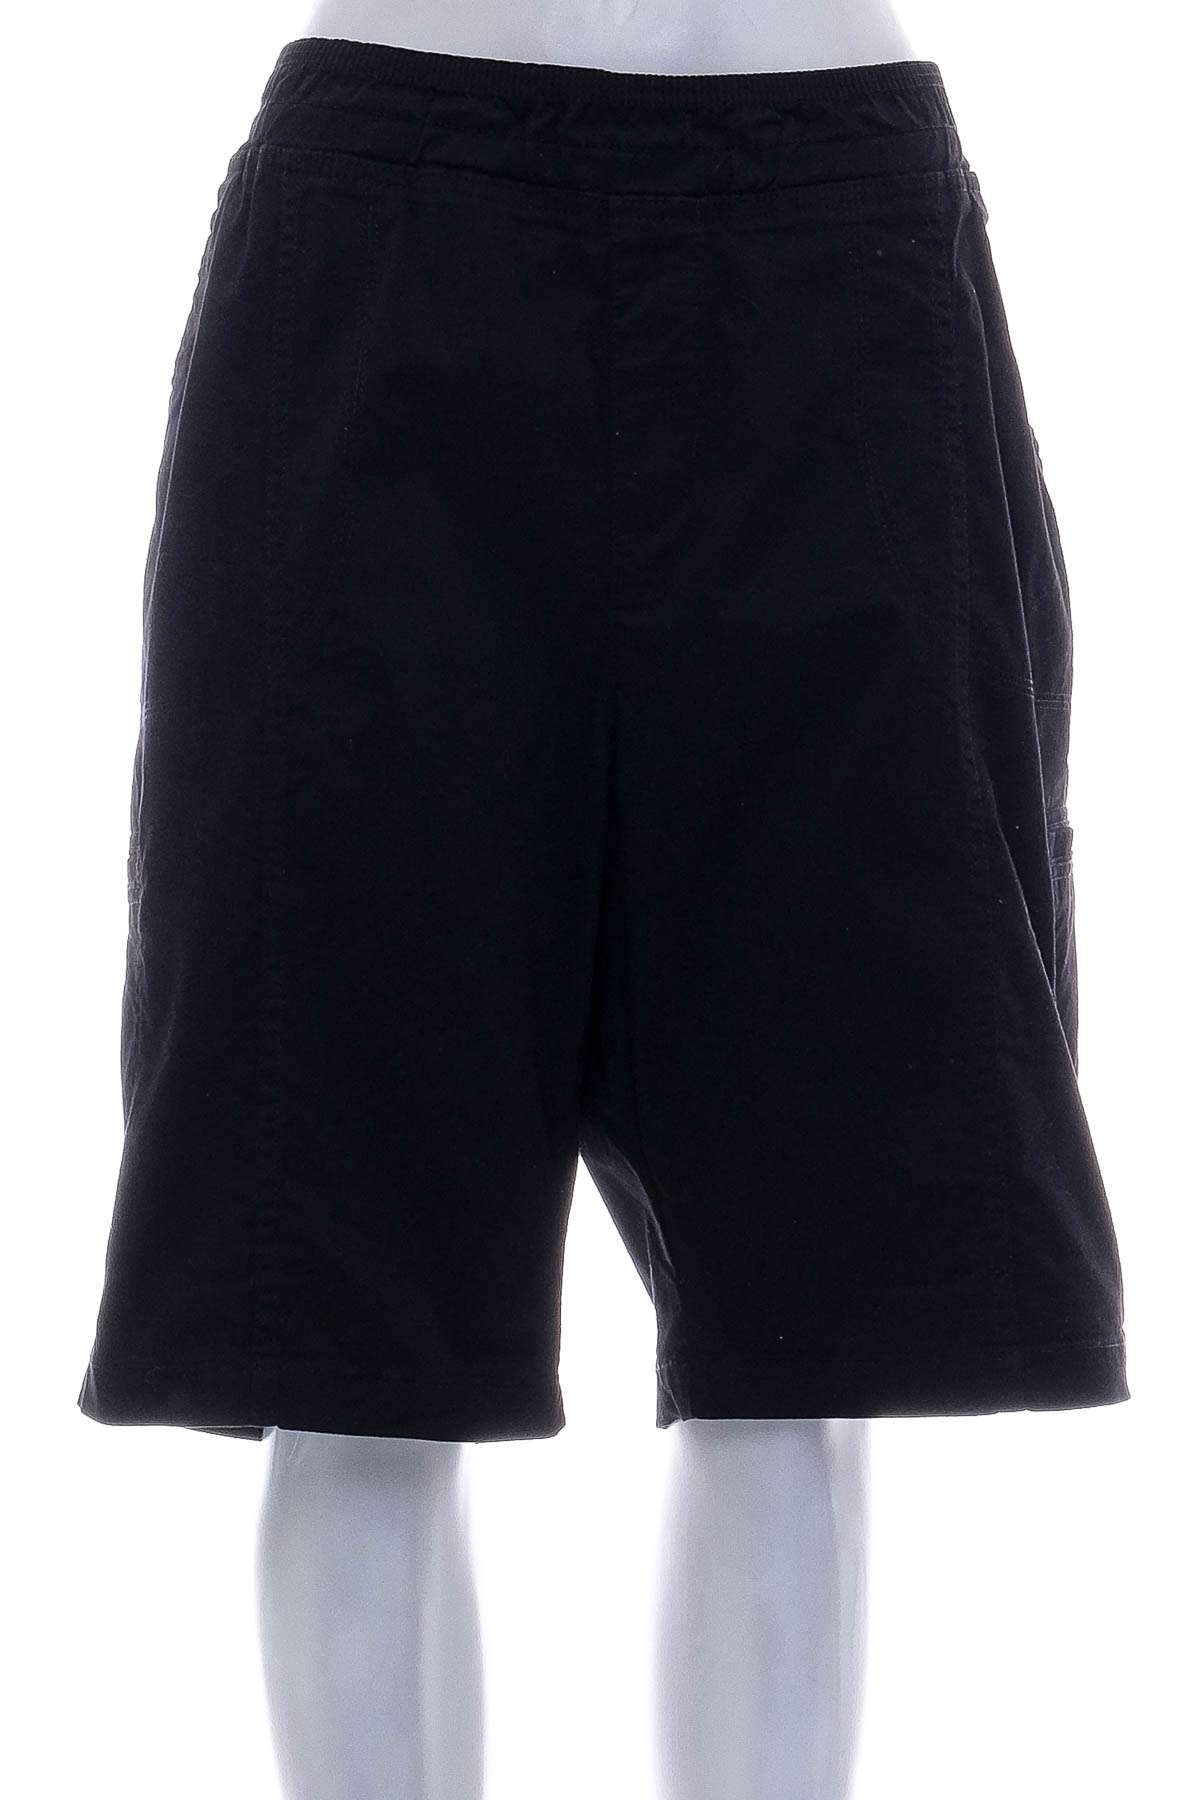 Female shorts - Lee - 0